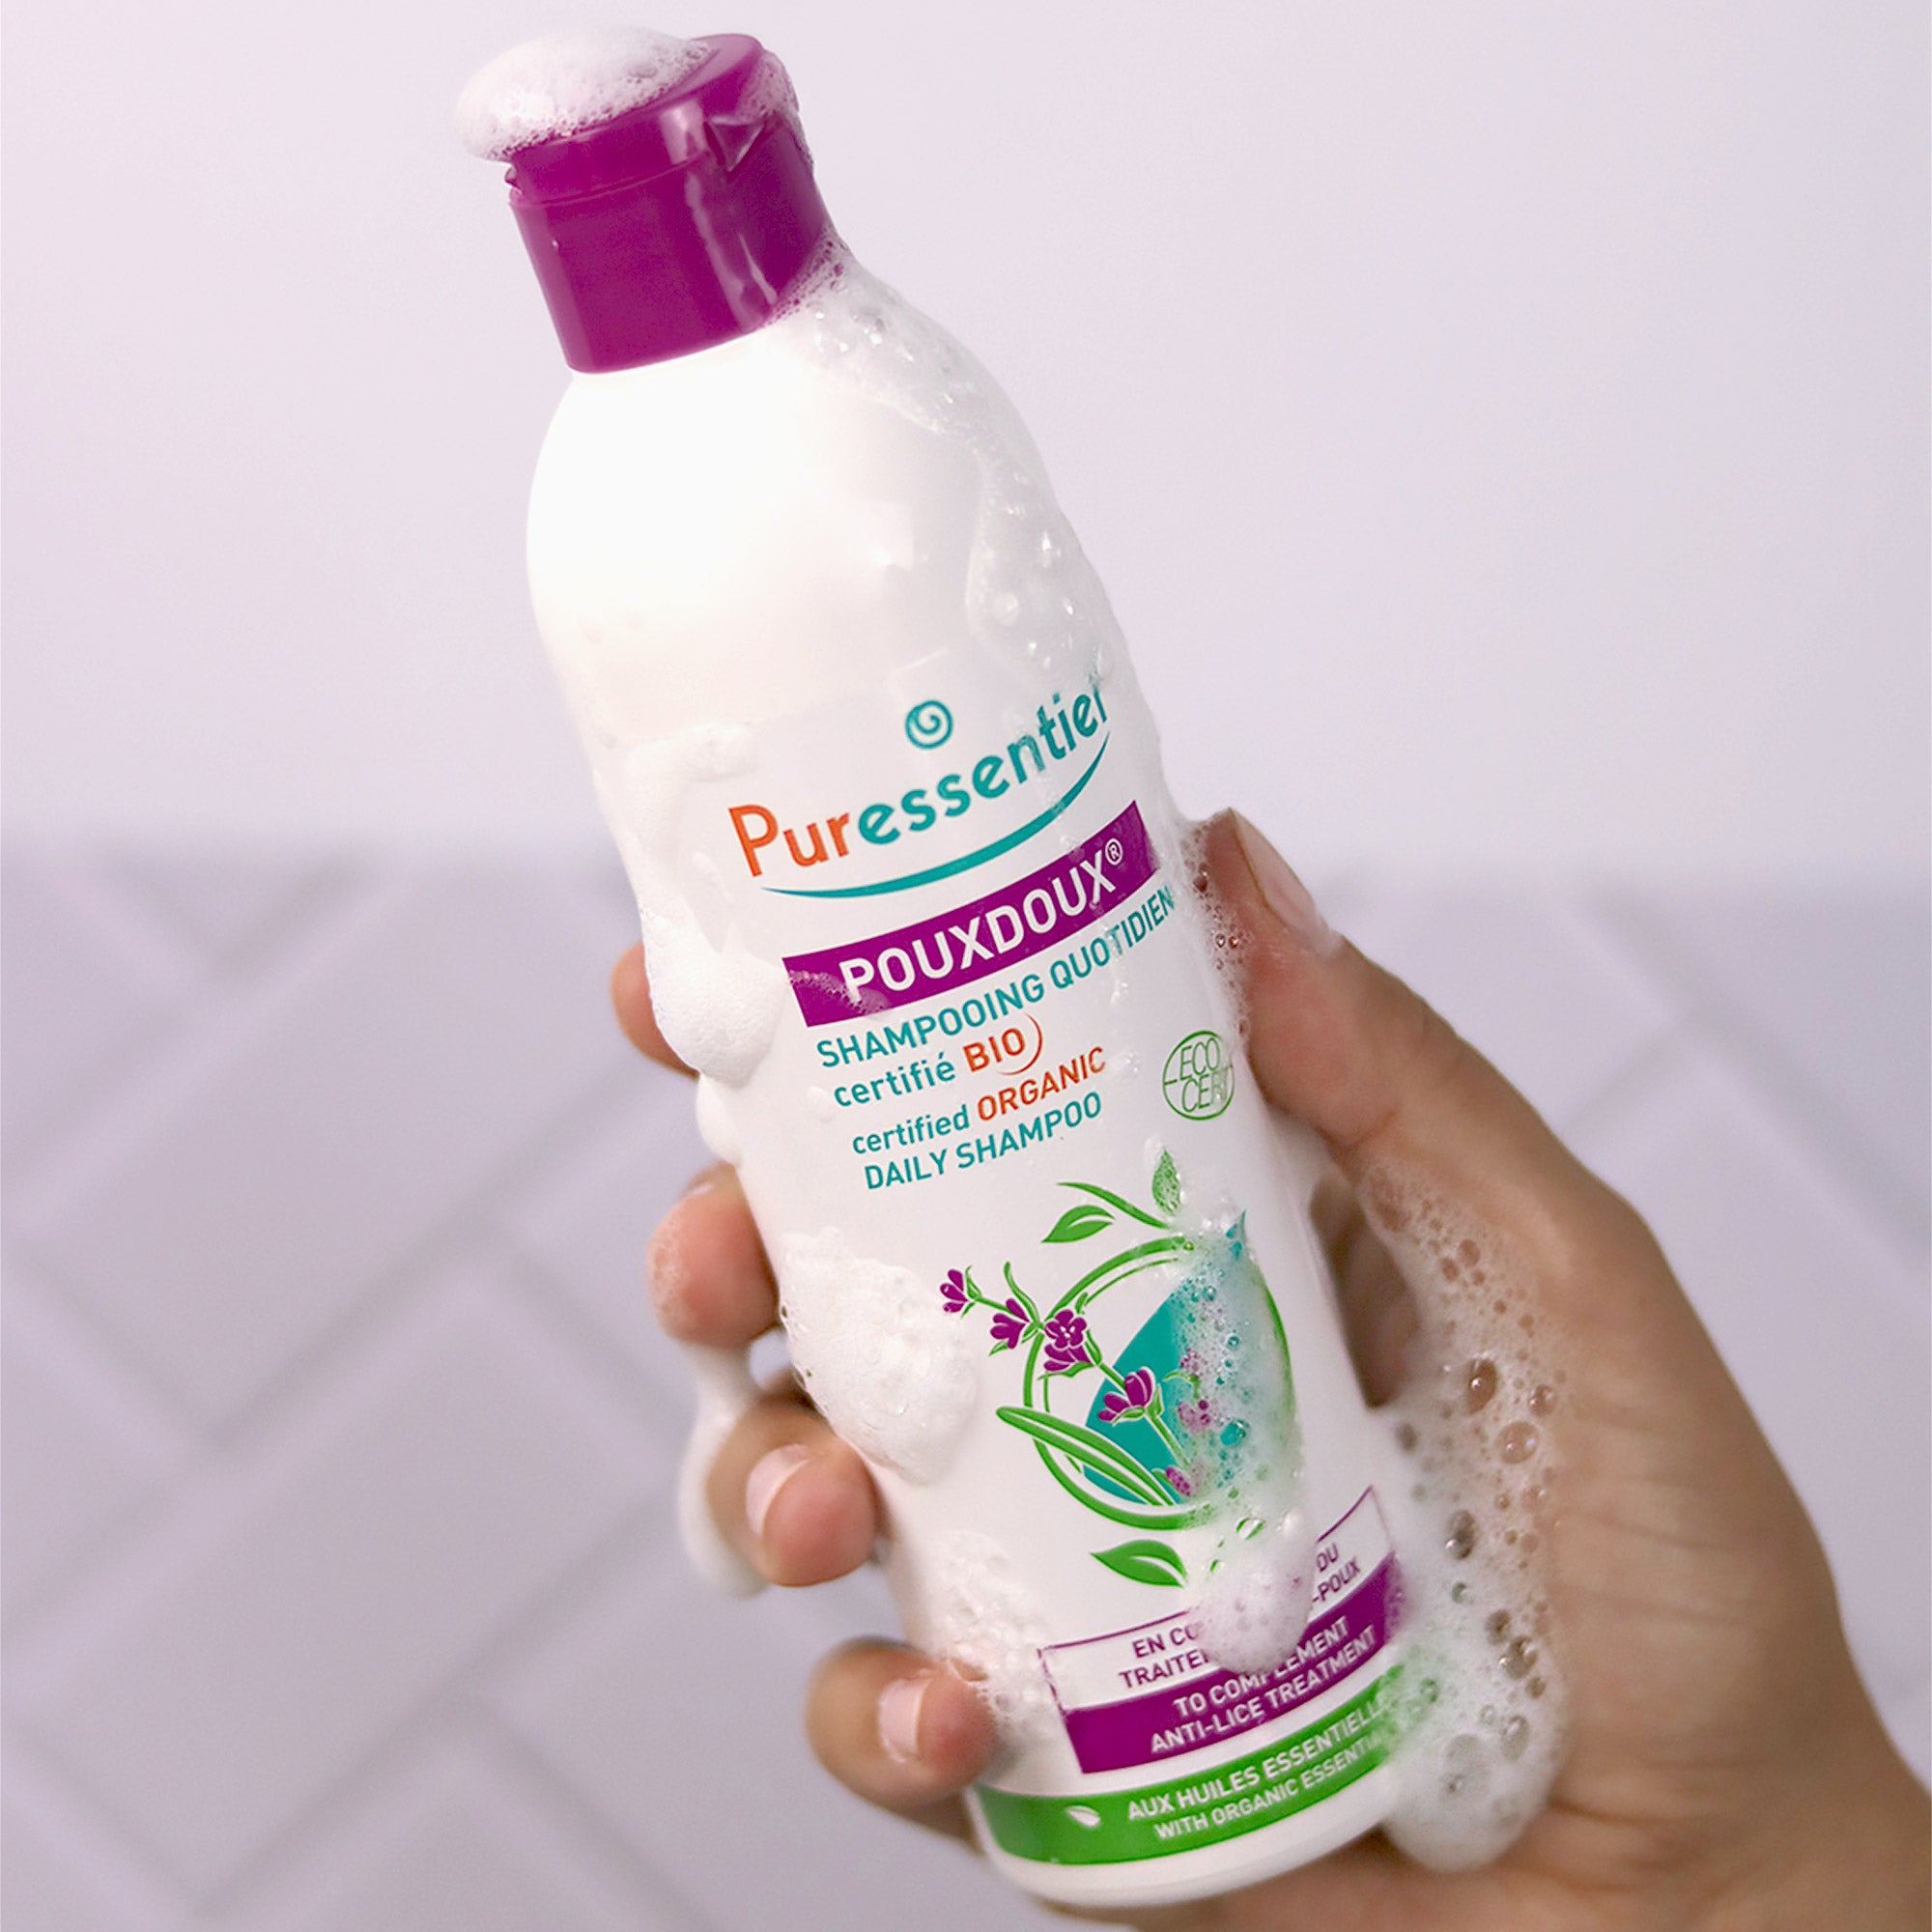 Achetez Multipharma shampooing anti poux 200ml en ligne ?